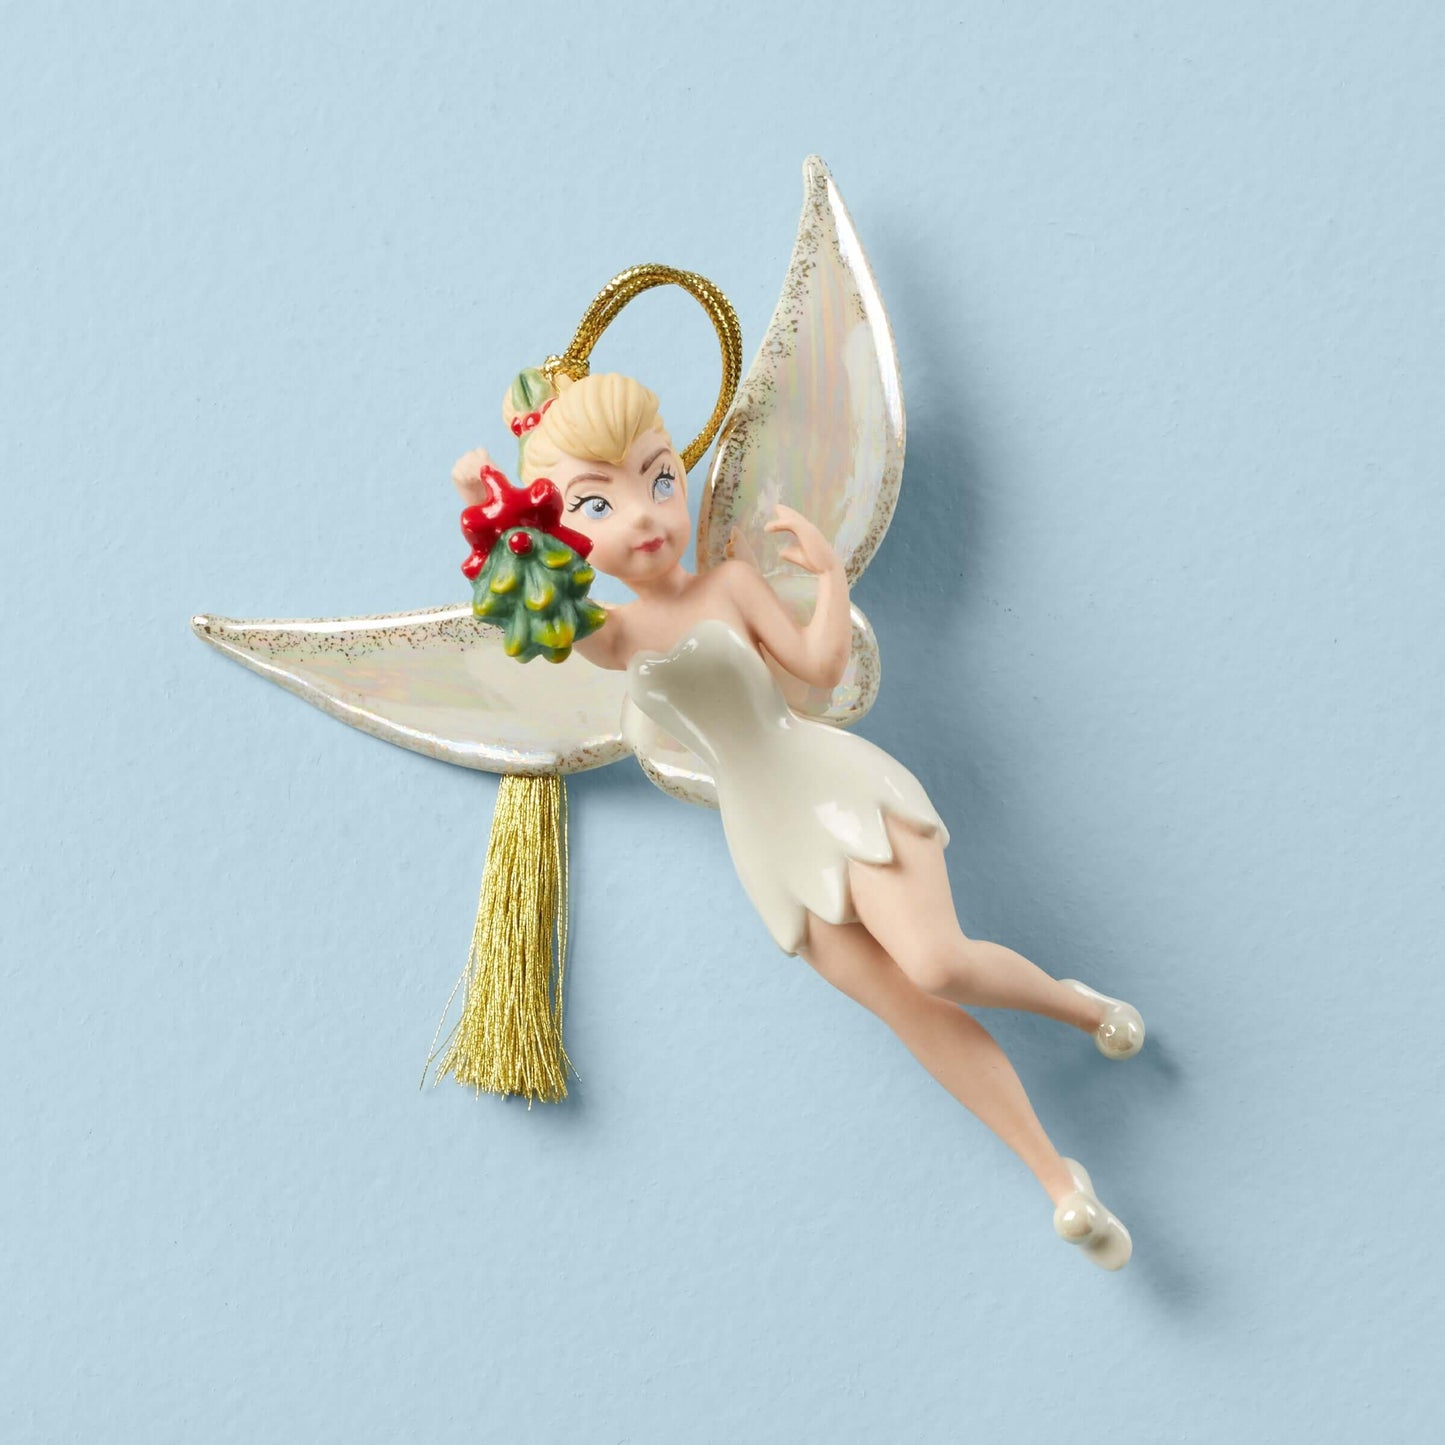 2023 Tinker Bell with Mistletoe Ornament